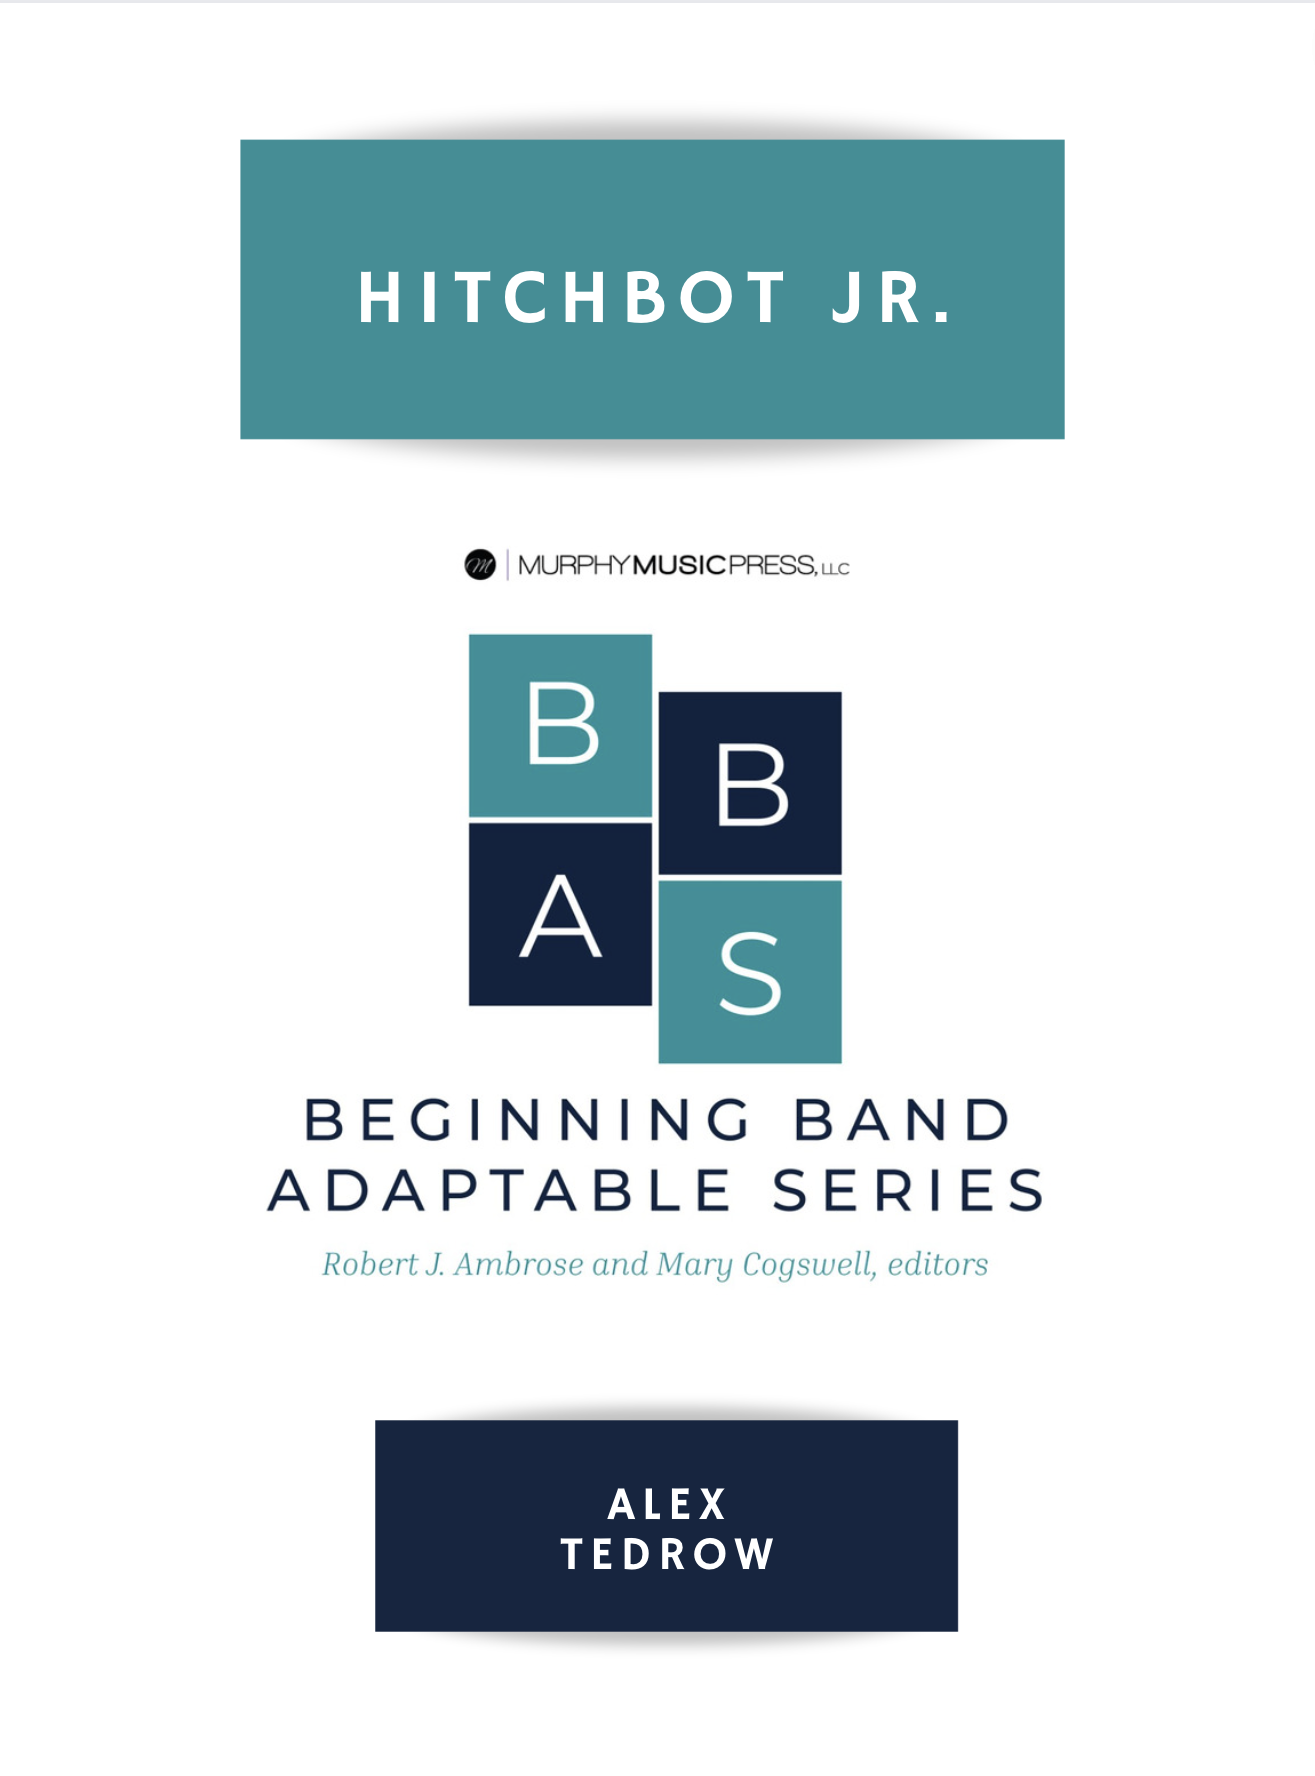 HitchBOT Jr. by Alex Tedrow